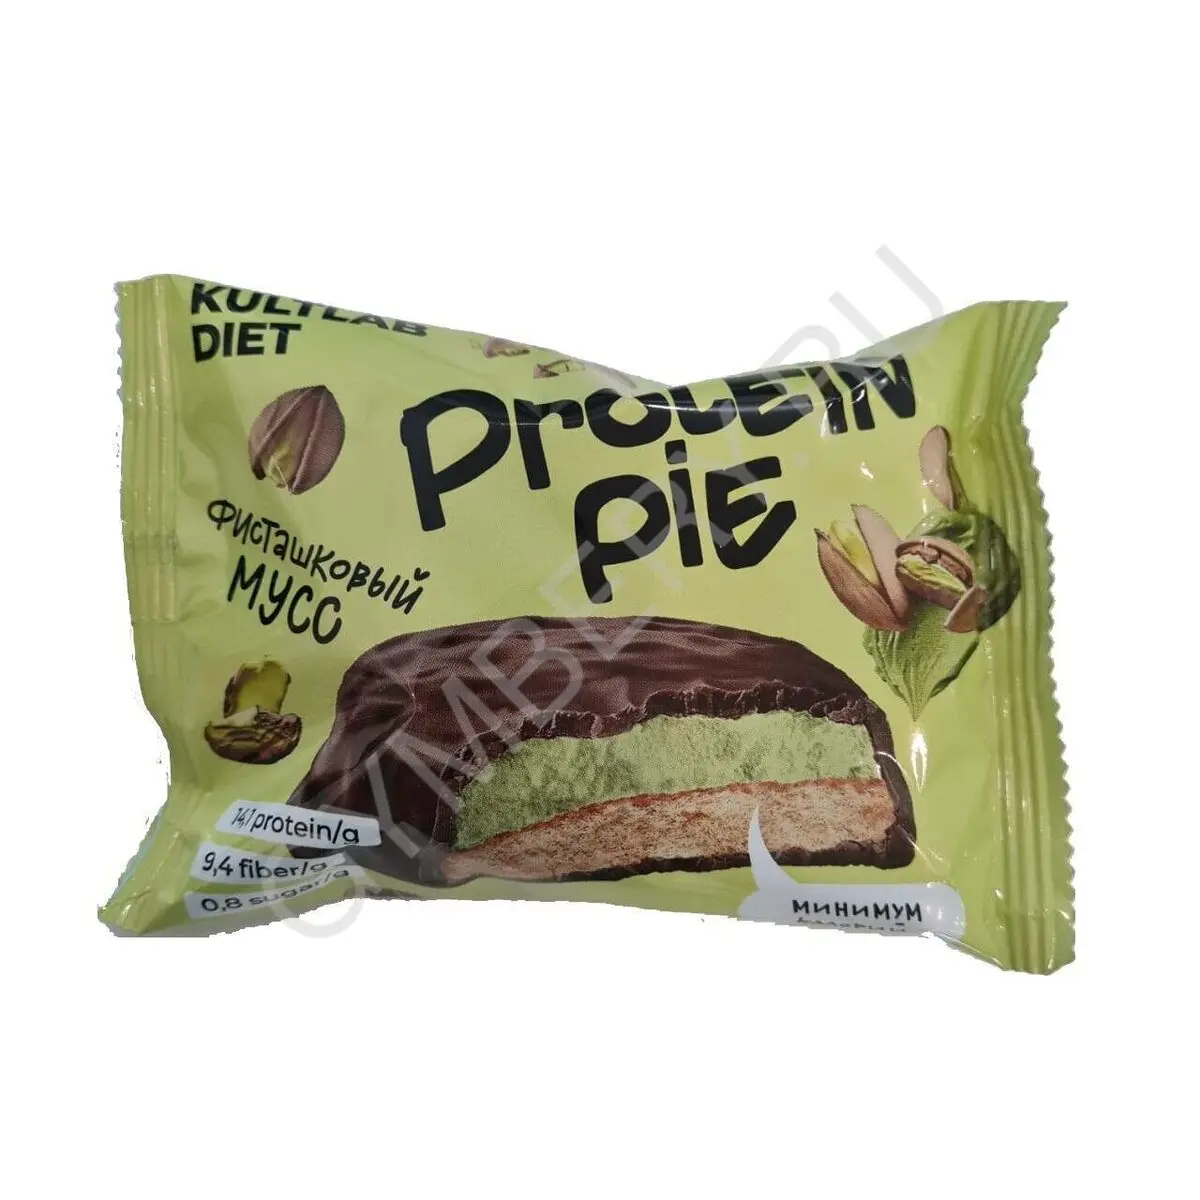 Kultlab Protein Pie, глазурь, 60 гр (Фисташковый мусс) шт, арт. 0105024